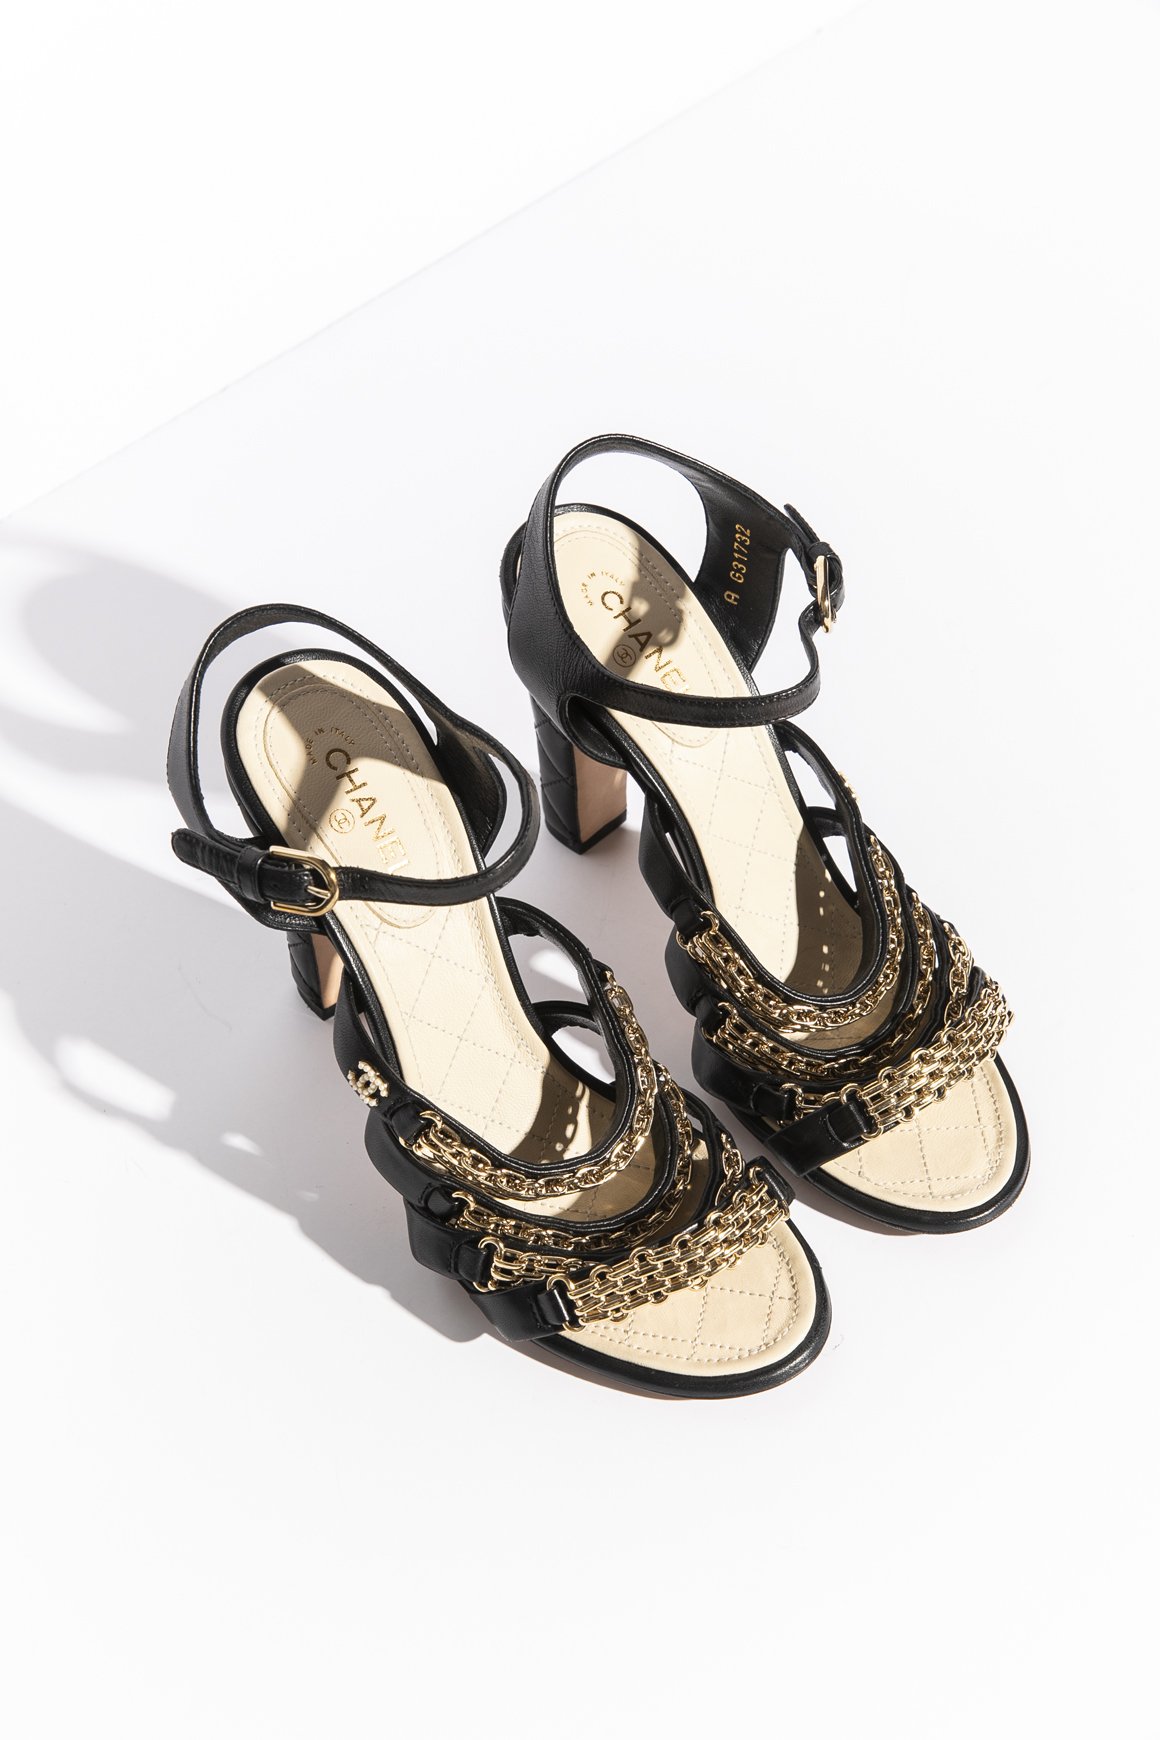 CHANEL Black & Gold Block Heels (Sz. 38.5) (Copy) — MOSS Designer